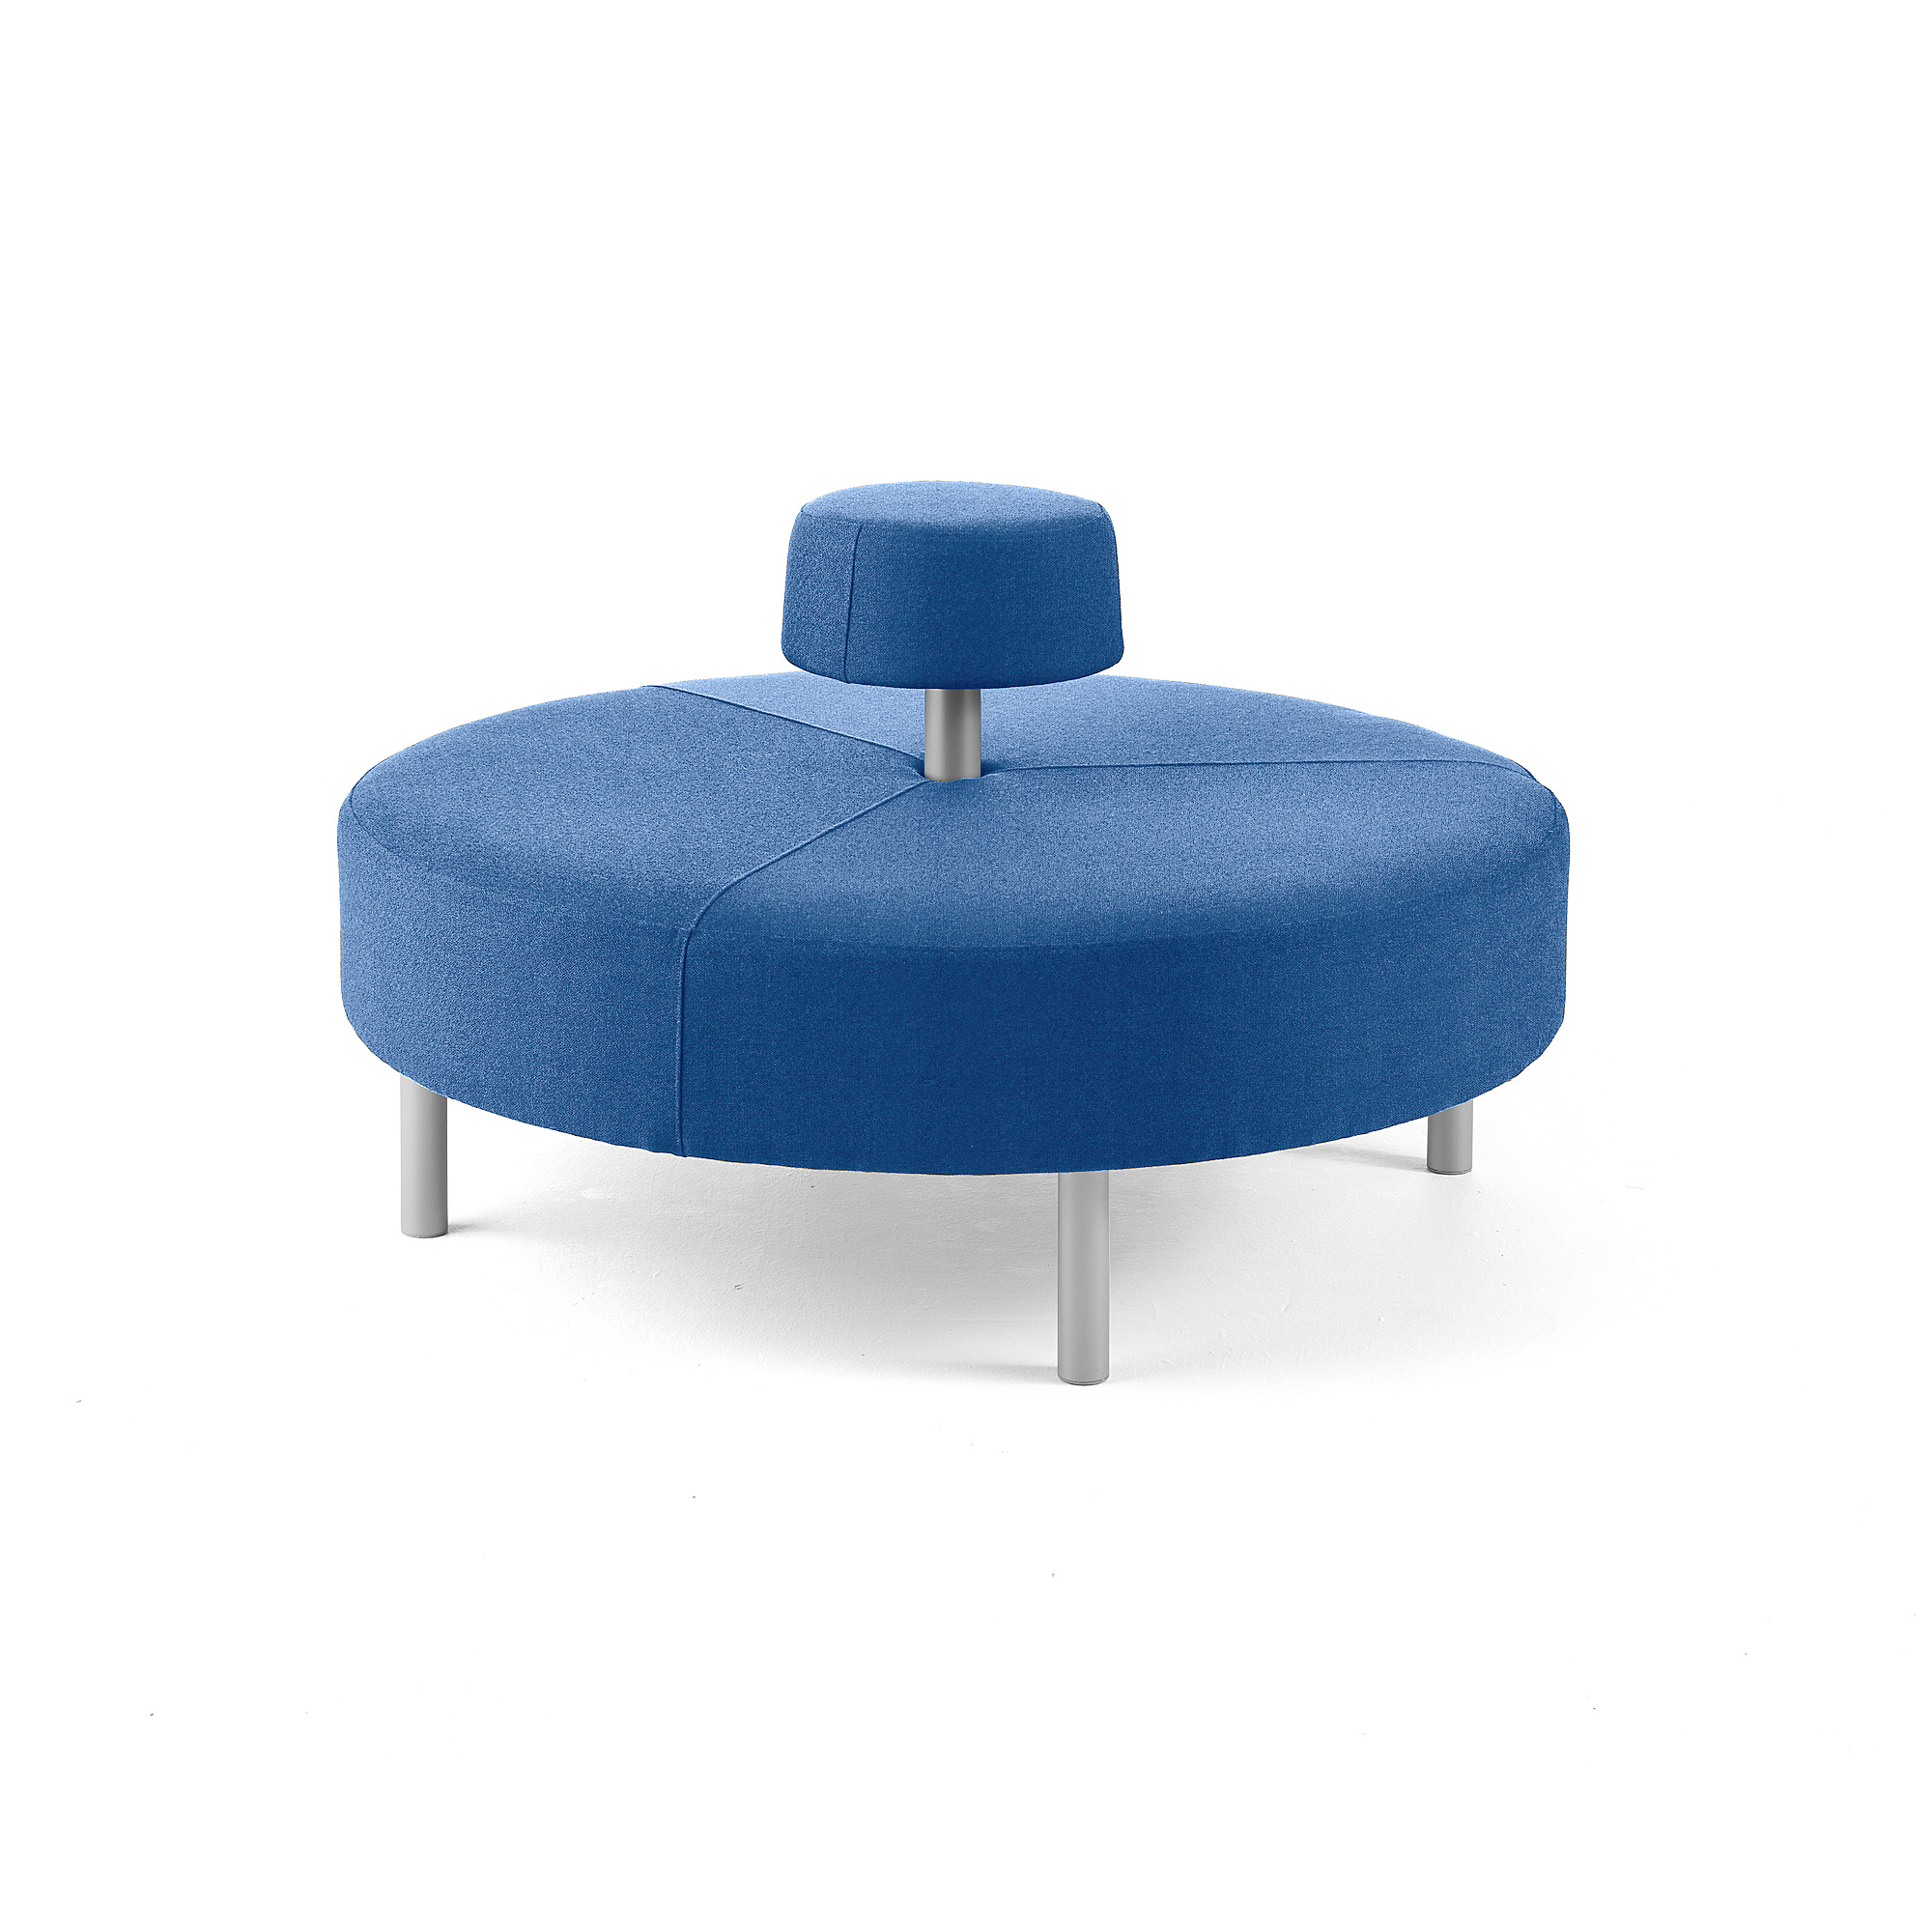 Kulatá sedačka DOT, kruhové opěradlo, Ø 1300 mm, potah Medley, blankytně modrá